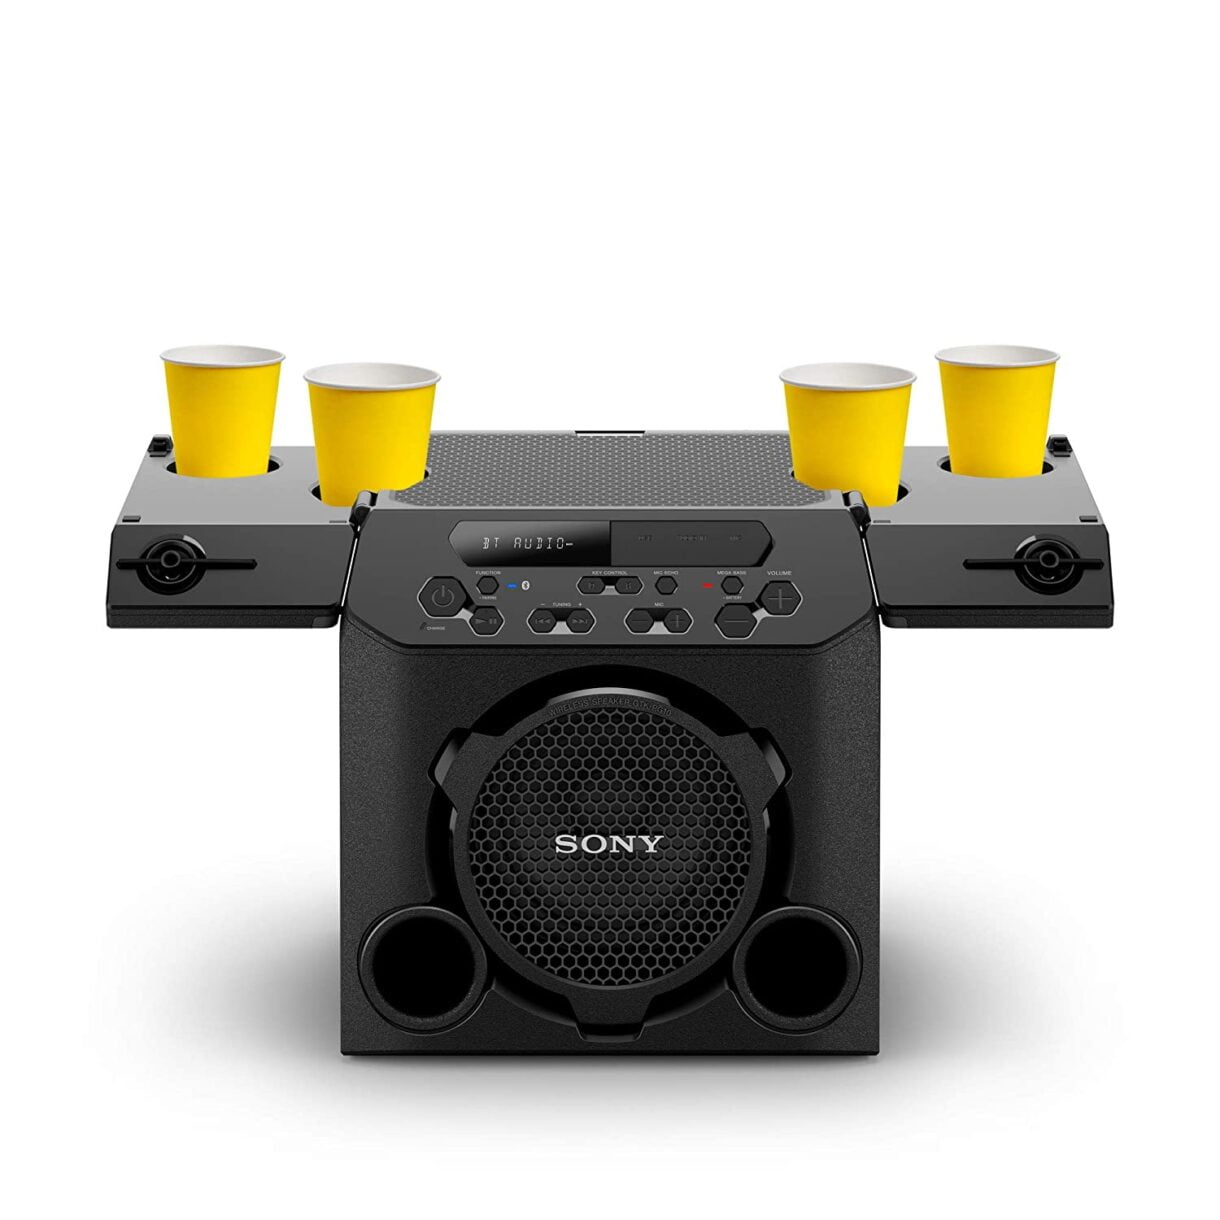 Sony GTK-PG10 Wireless Party Speaker with Built-in Battery